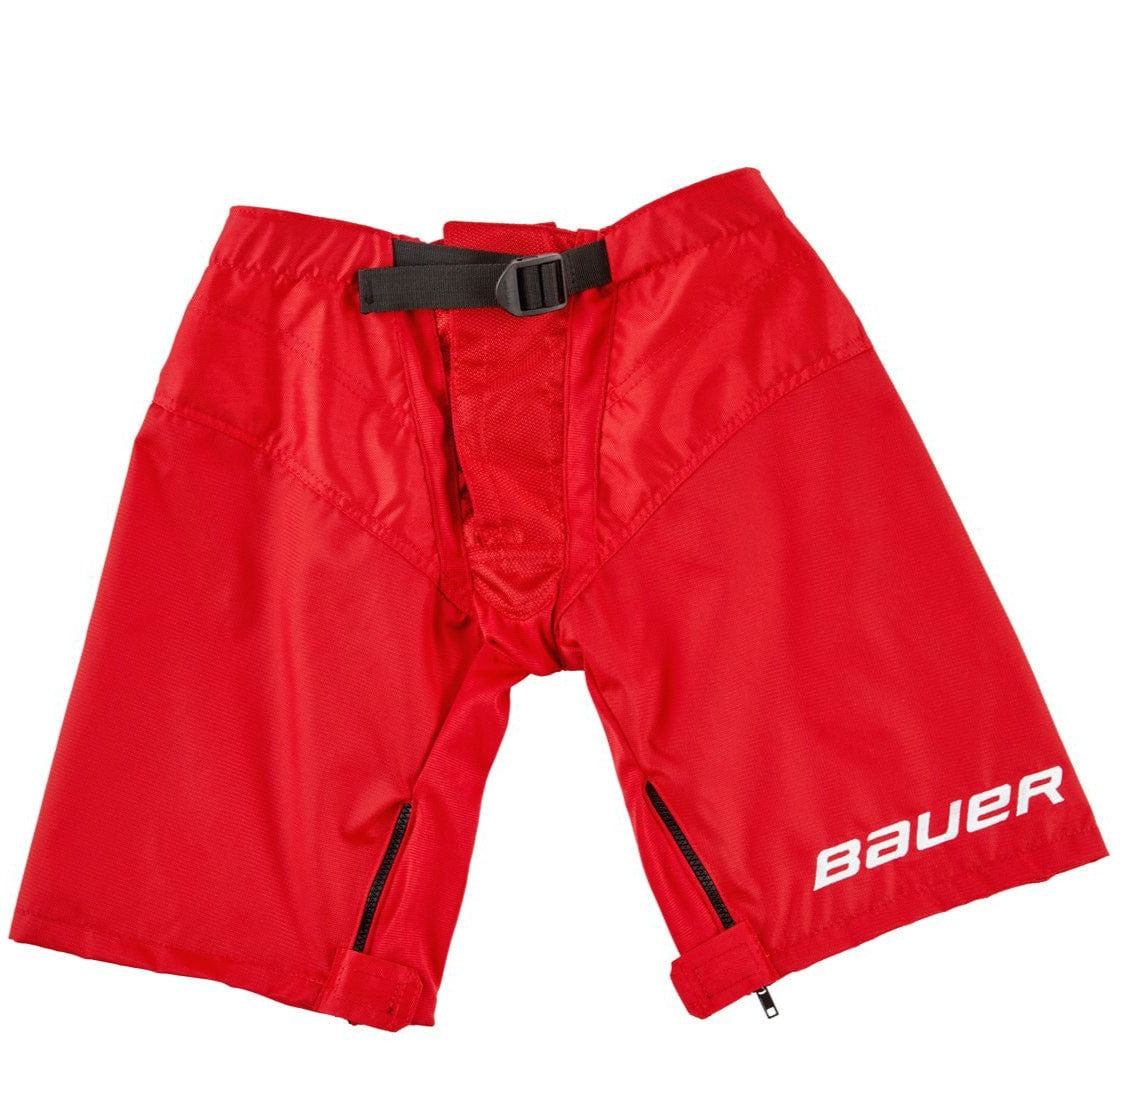 Bauer Junior Hockey Pant Shells